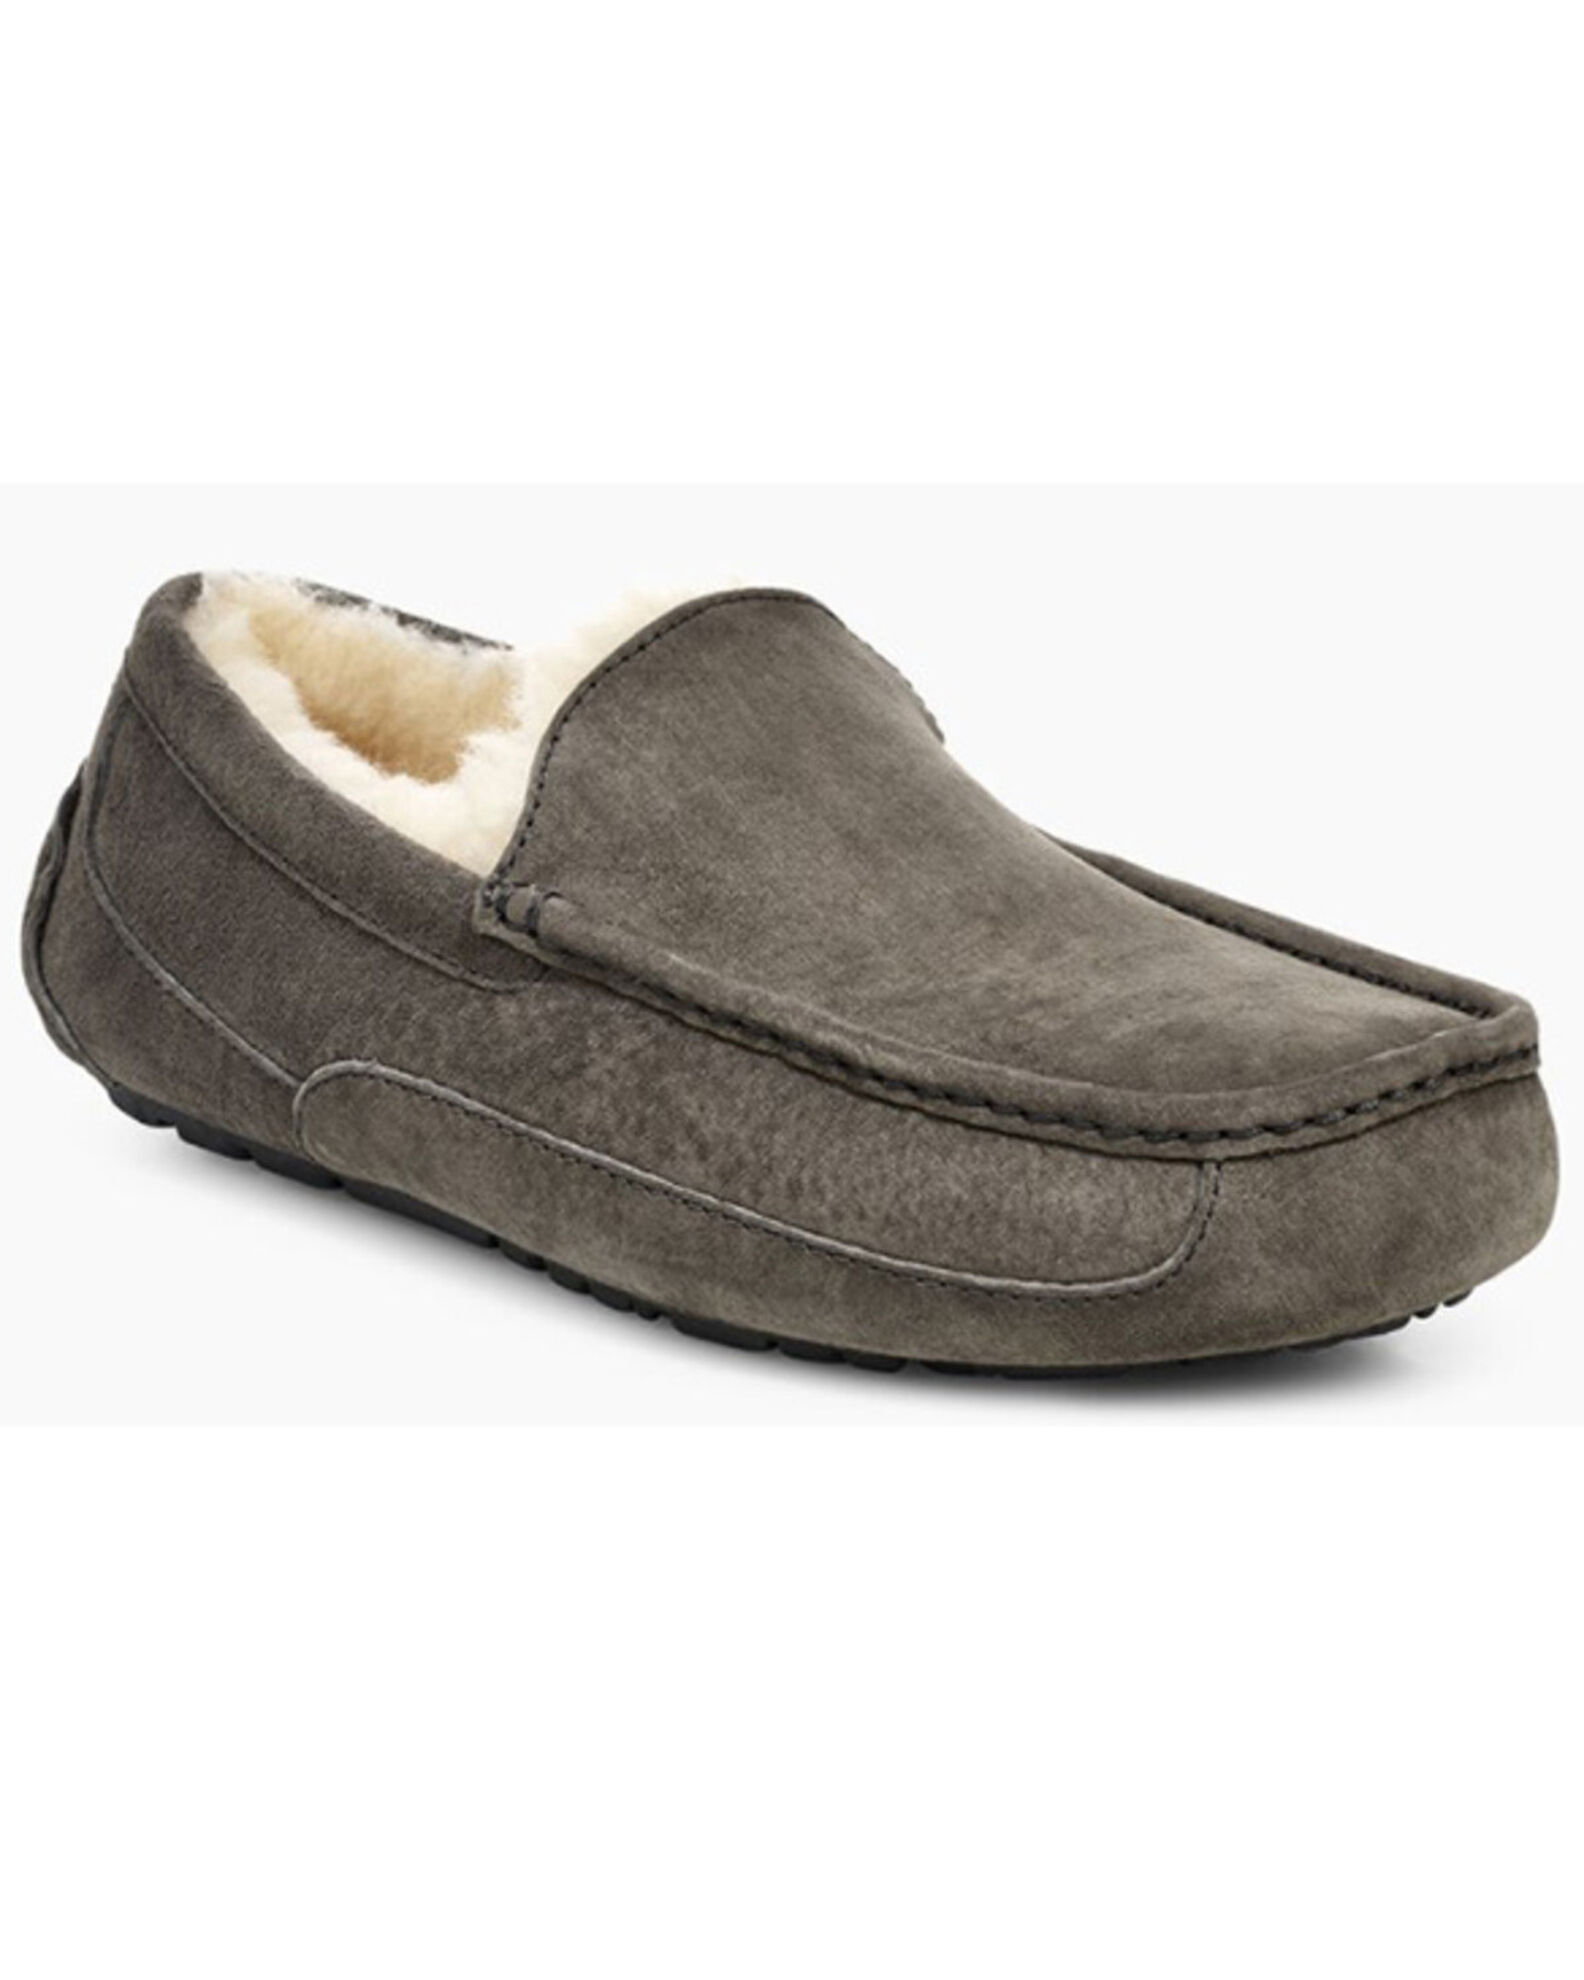 Product Name: UGG Men's Ascot Slippers - Moc Toe